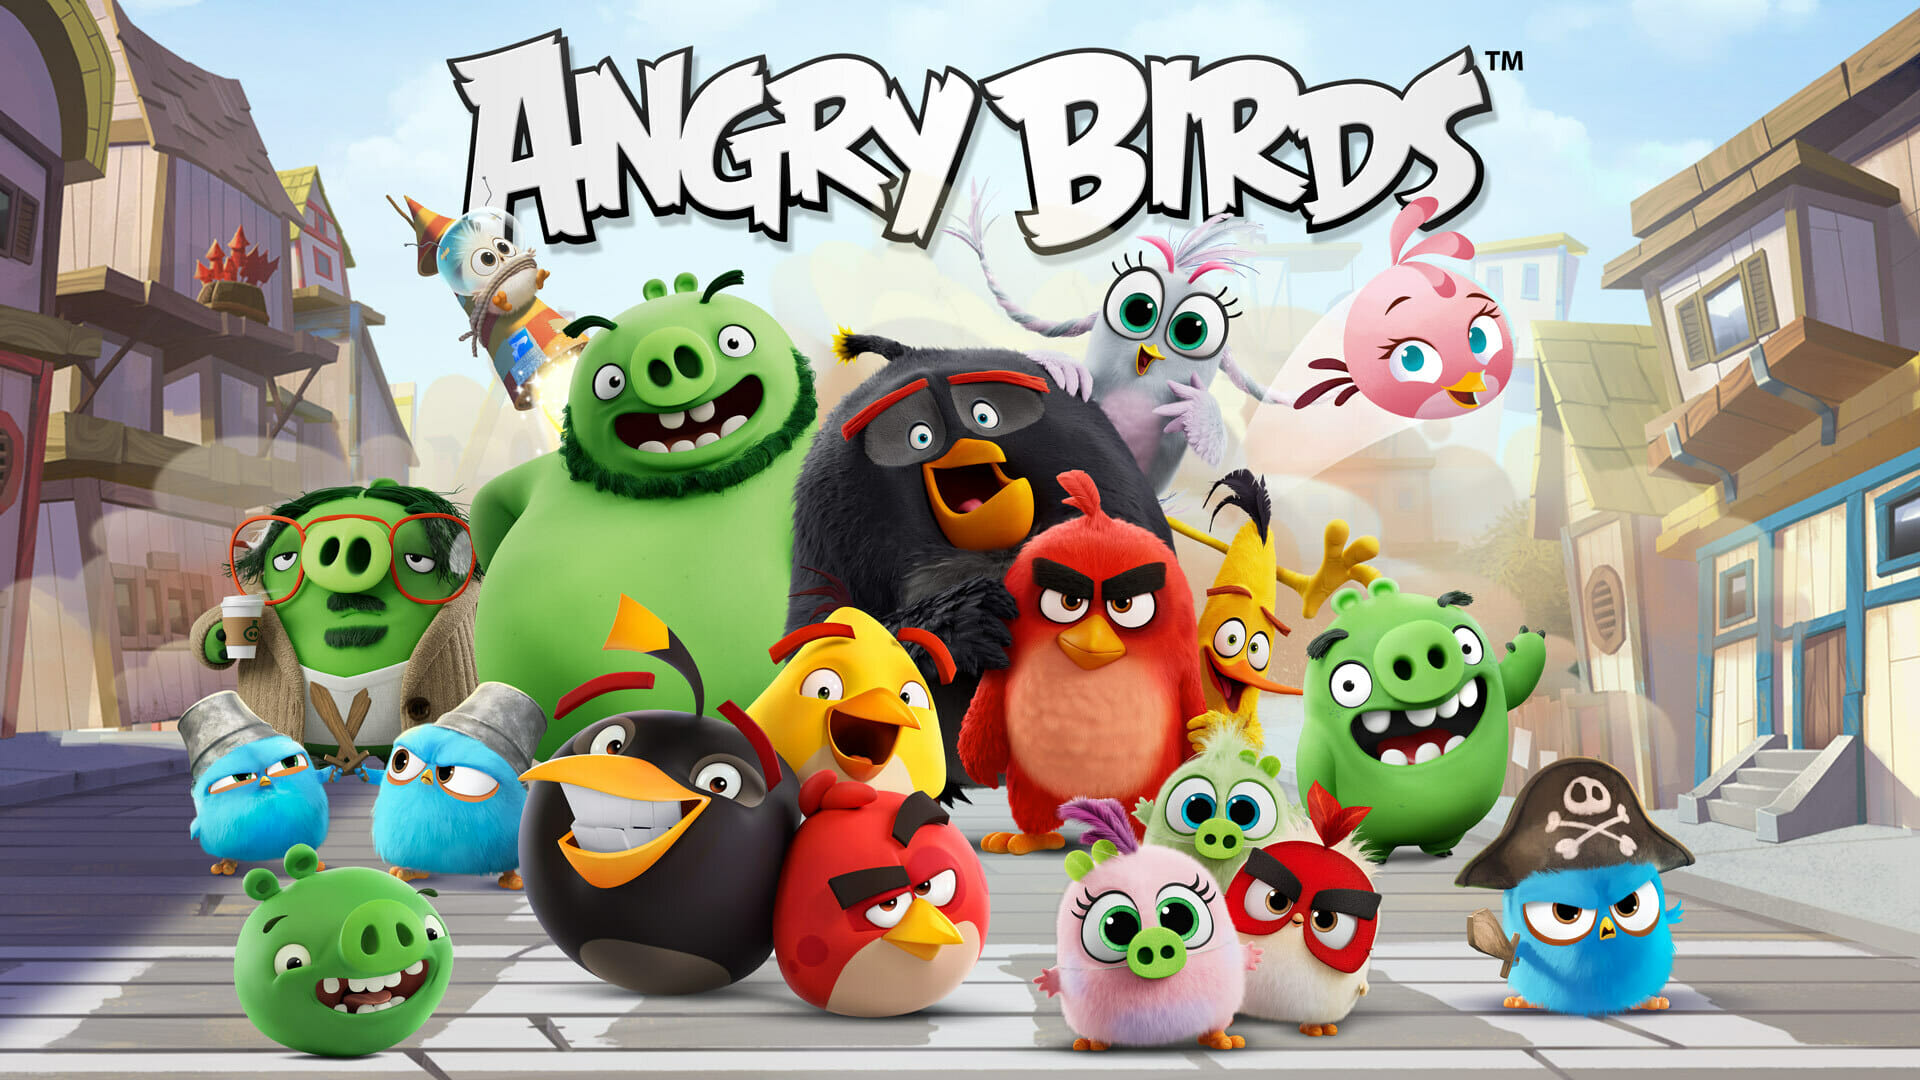 (c) Angrybirds.com